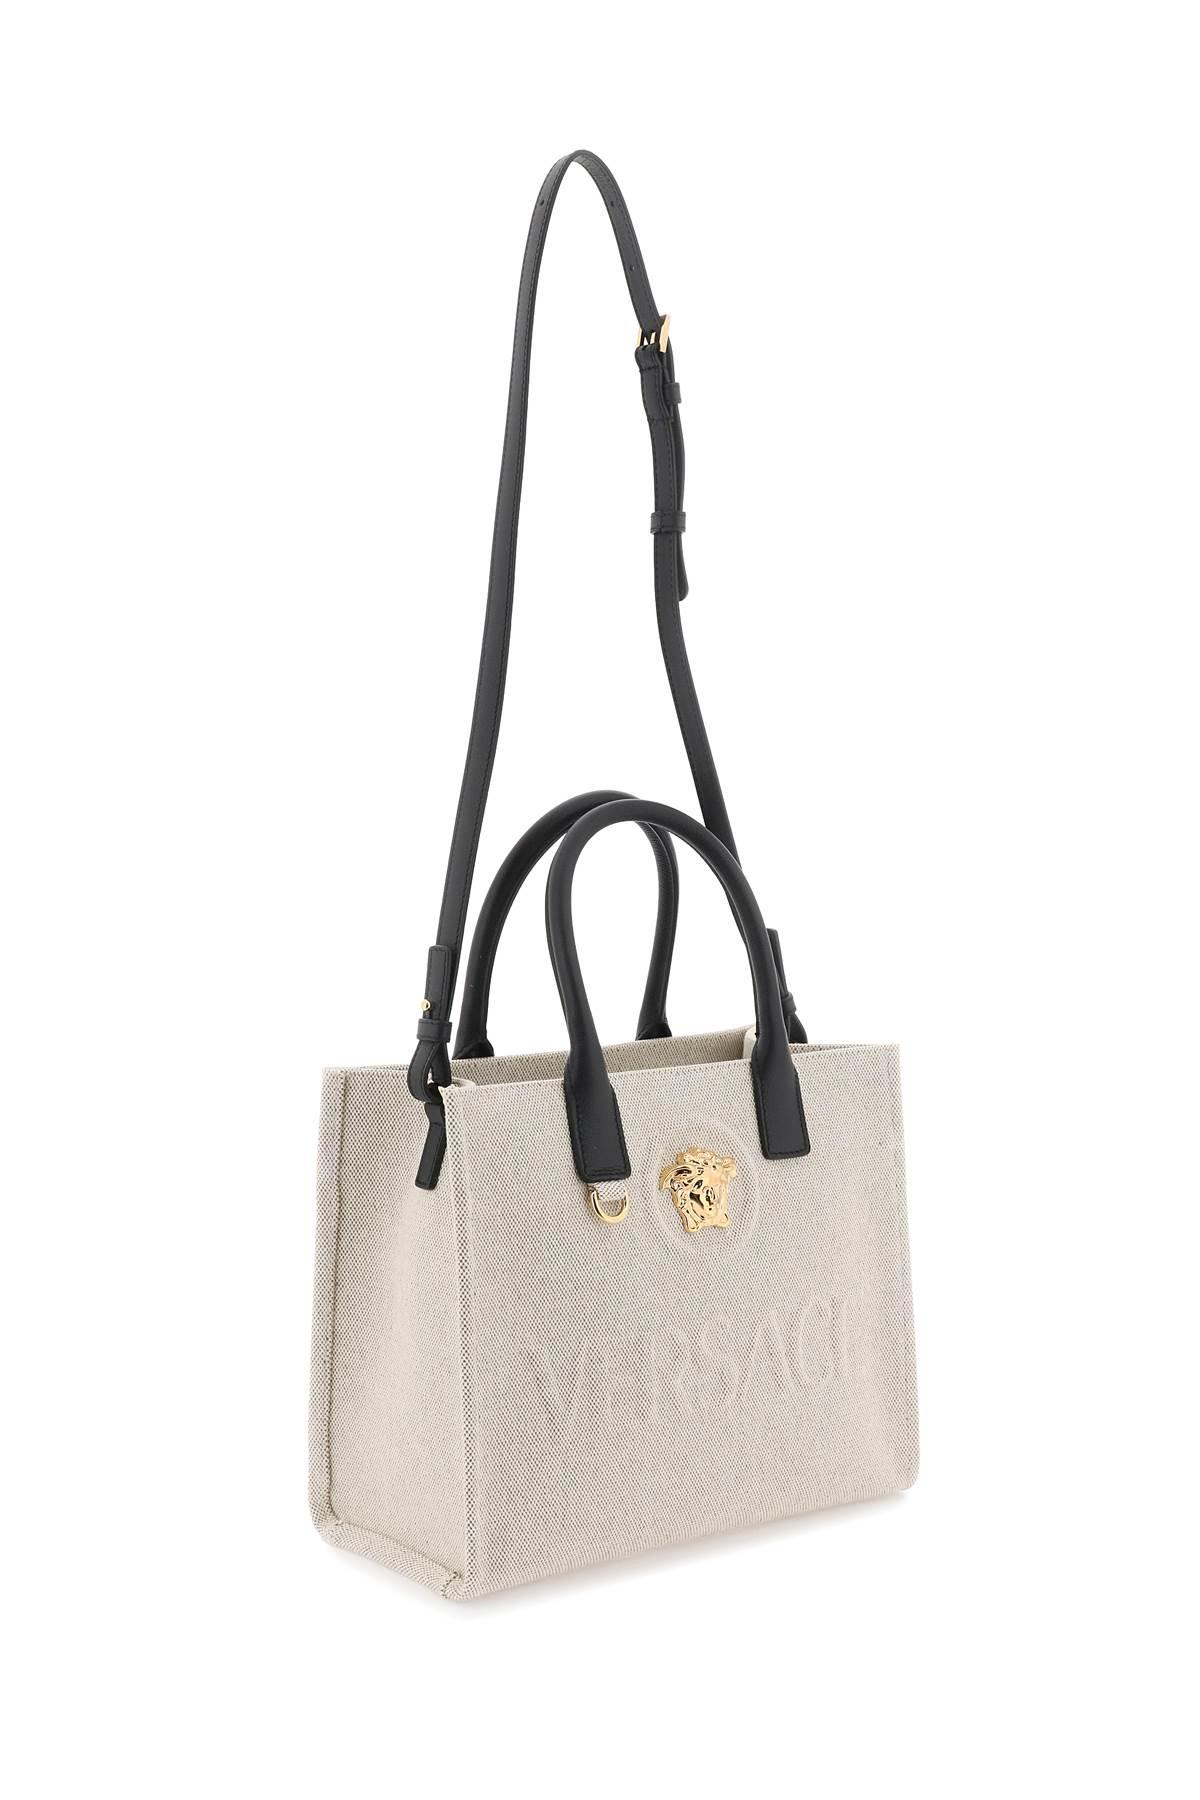 Versace La Medusa Convertible Tote Bag Leather Small Black 2027842